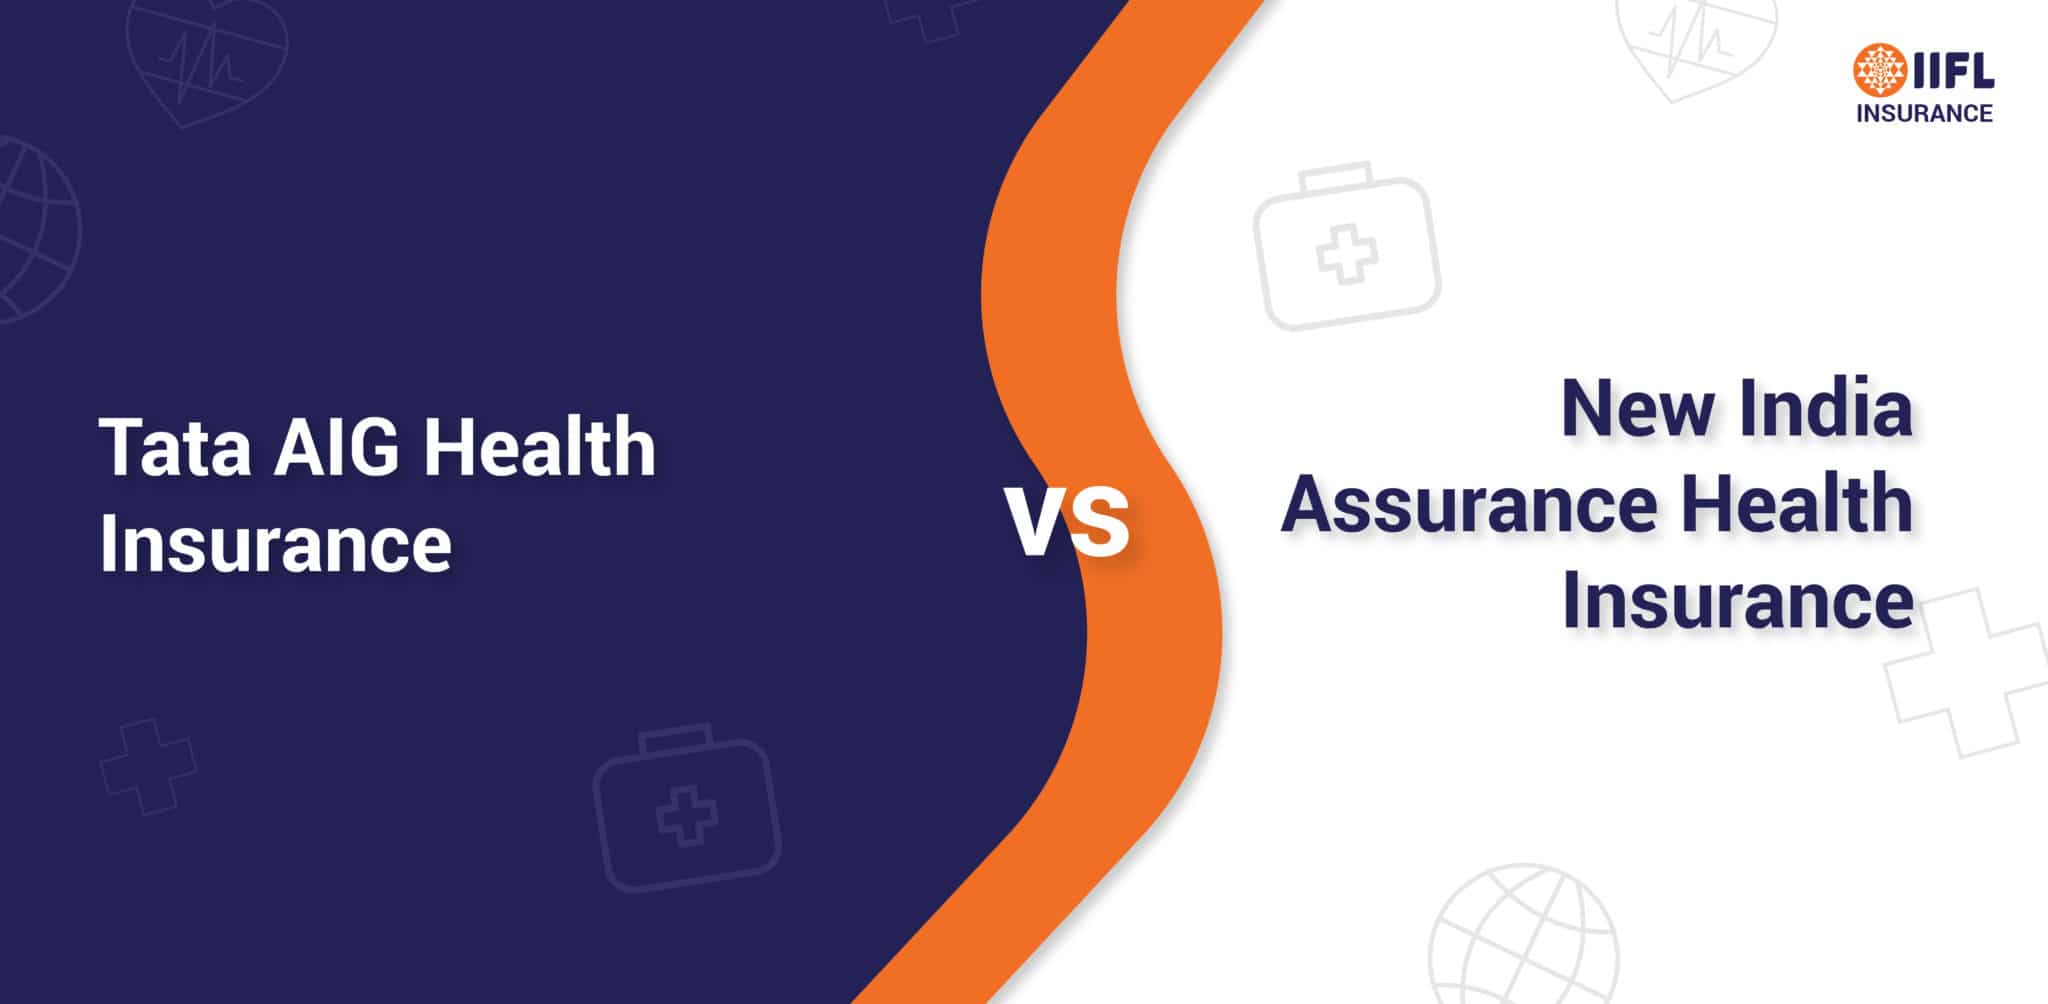 Tata AIG Health Insurance vs New India Assurance Health Insurance